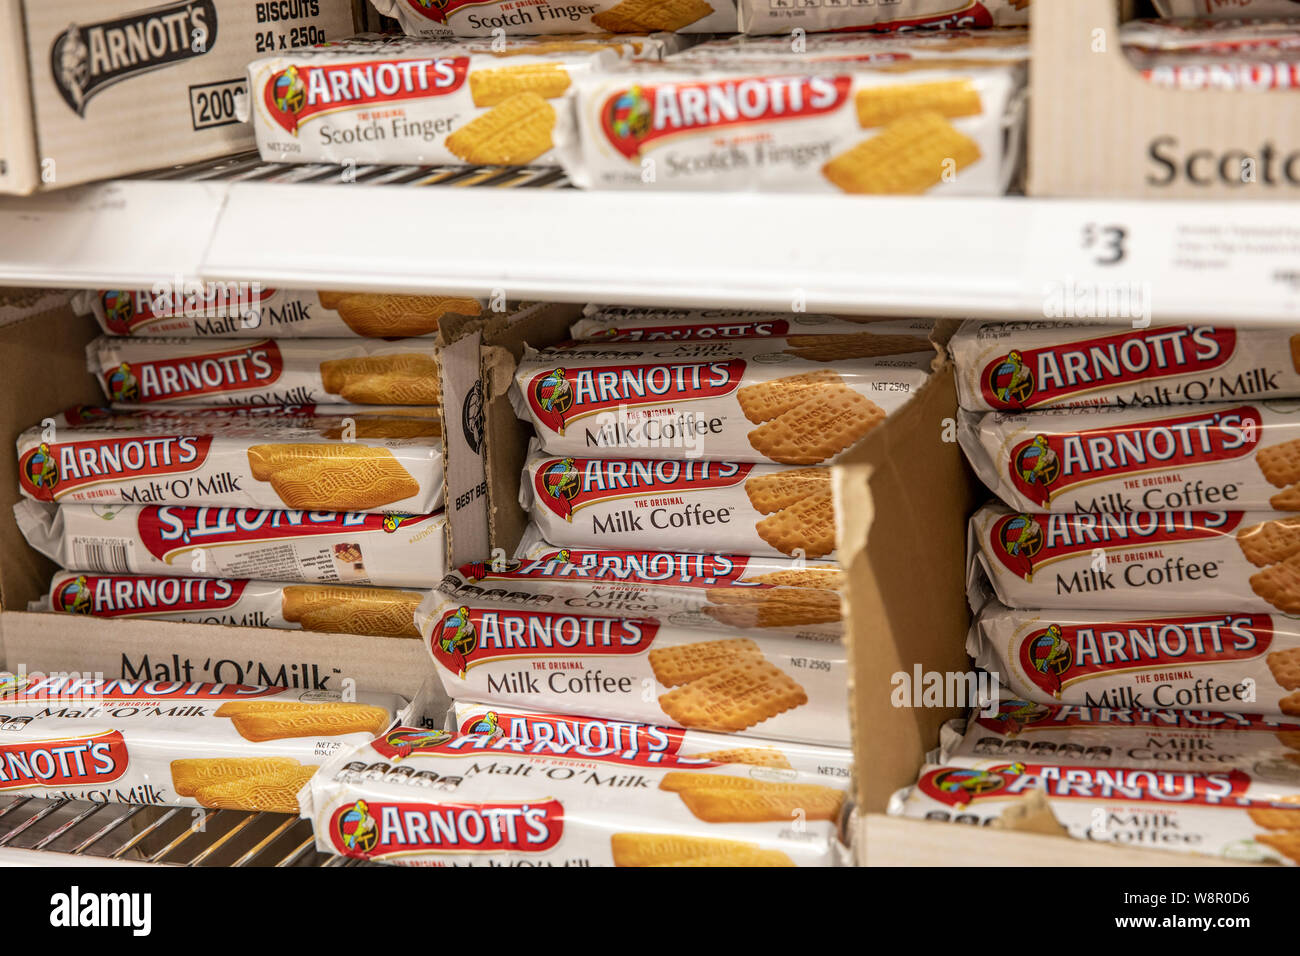 Arnotts australian biscuits scotch finger and milk coffee on a supermarket shelf in Sydney,Australia Stock Photo